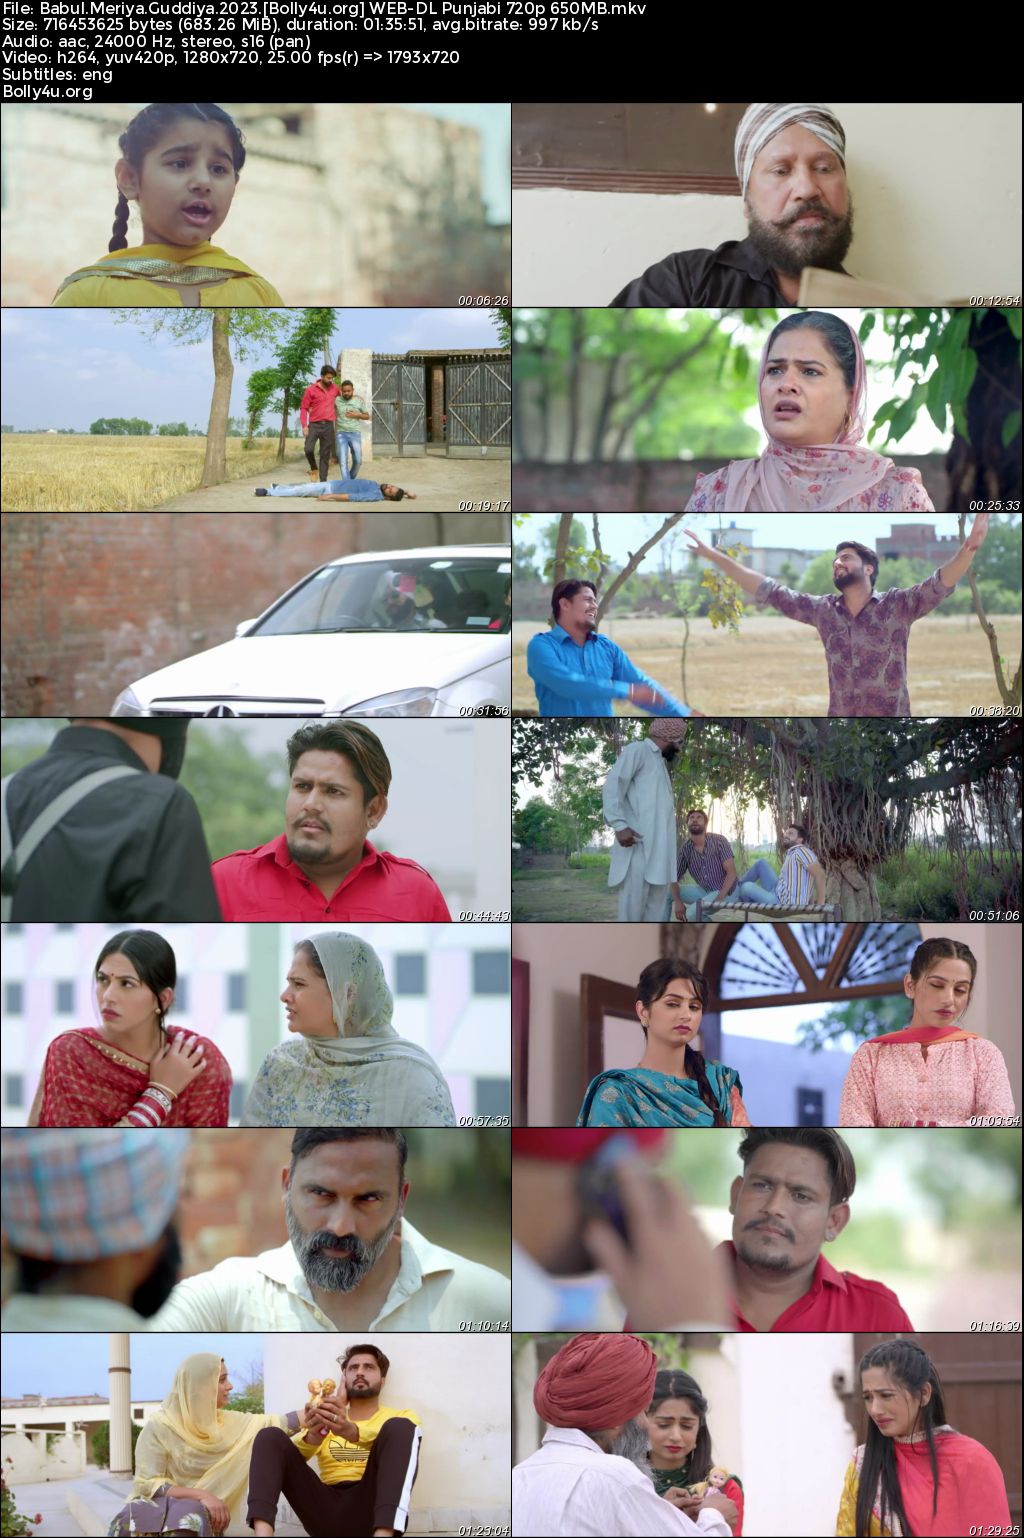 Babul Meriya Guddiya 2023 WEB-DL Punjabi Full Movie Download 1080p 720p 480p